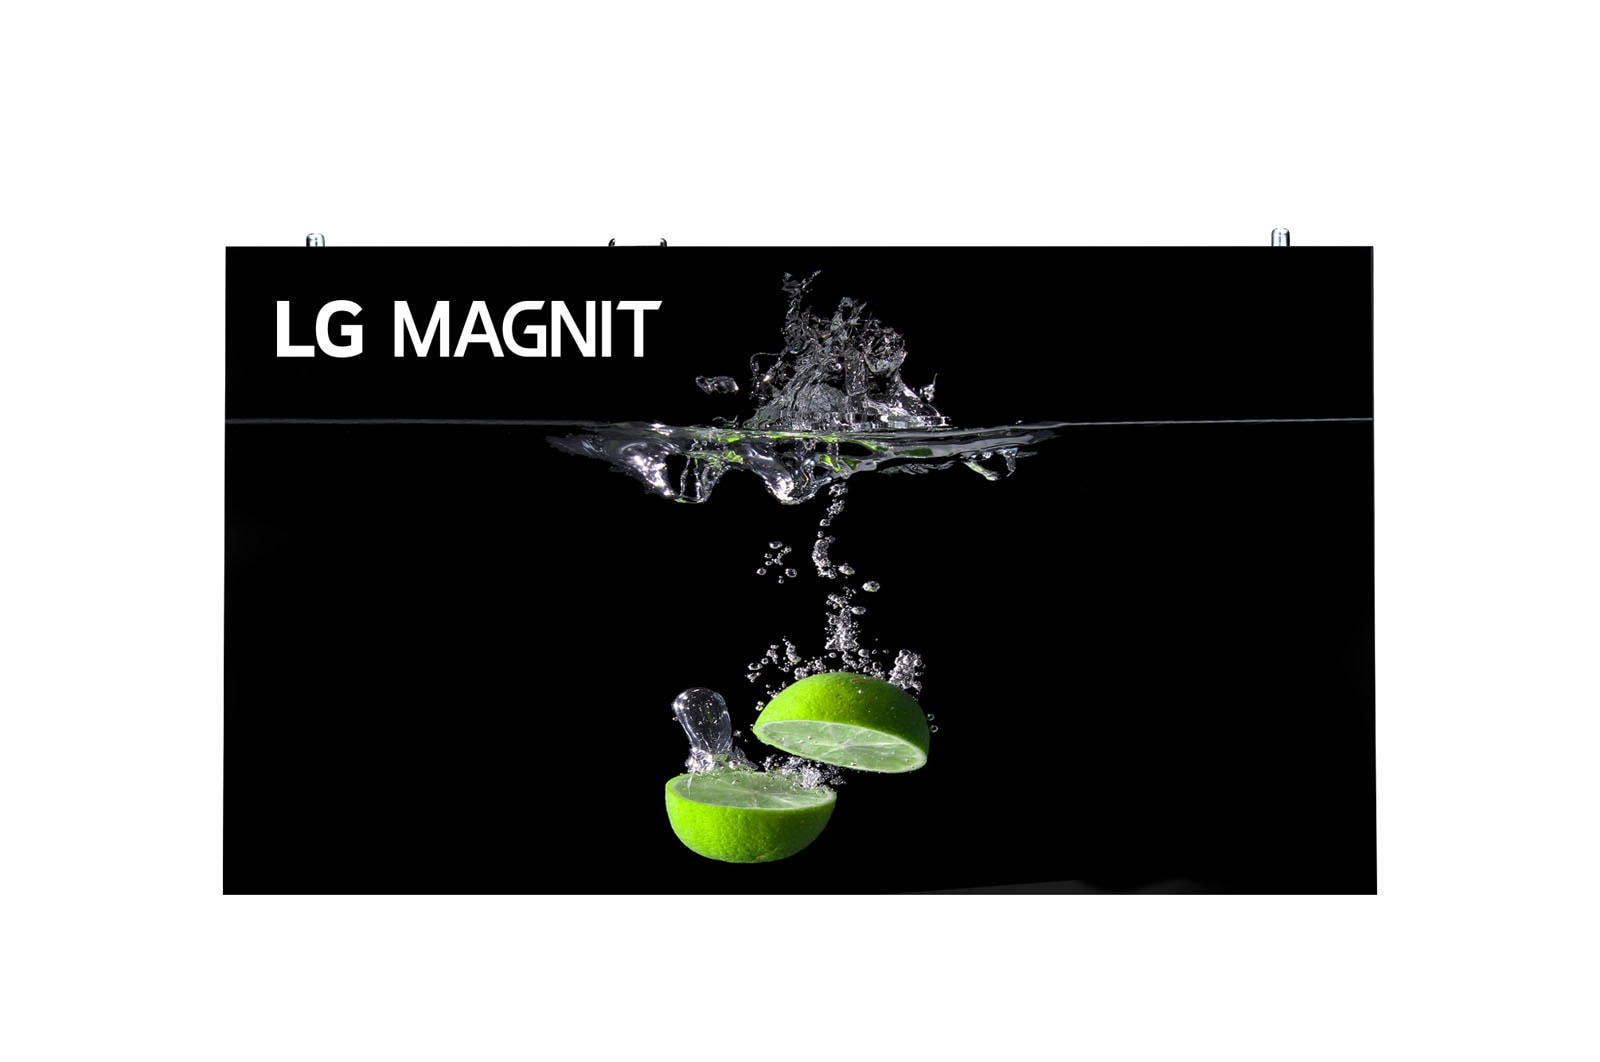 LG MAGNIT, LG LSAB009